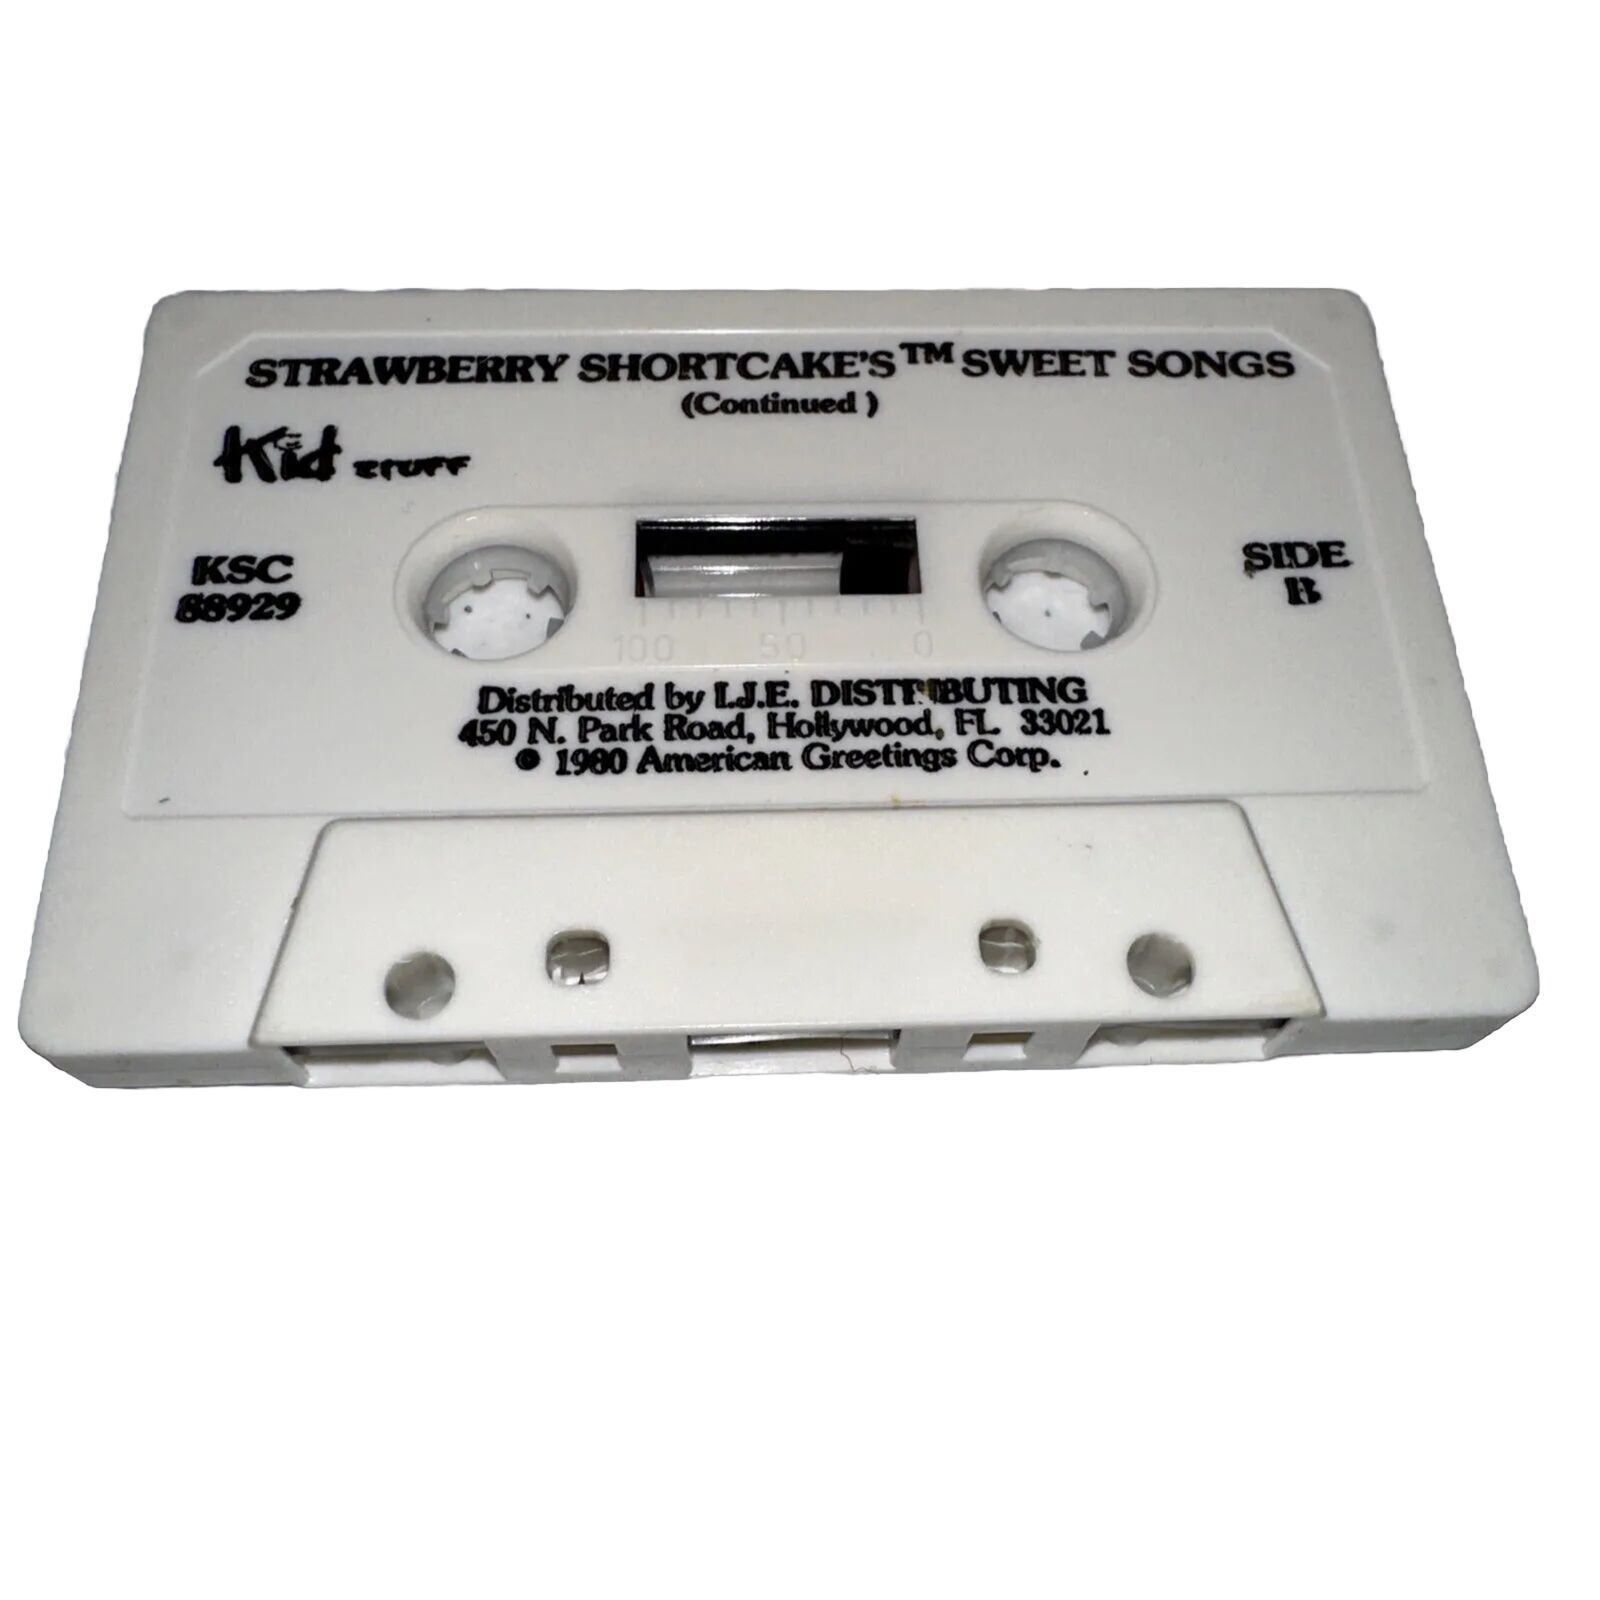 1980 American Greetings Strawberry Shortcake's Sweet Songs Audio Cassette Tape